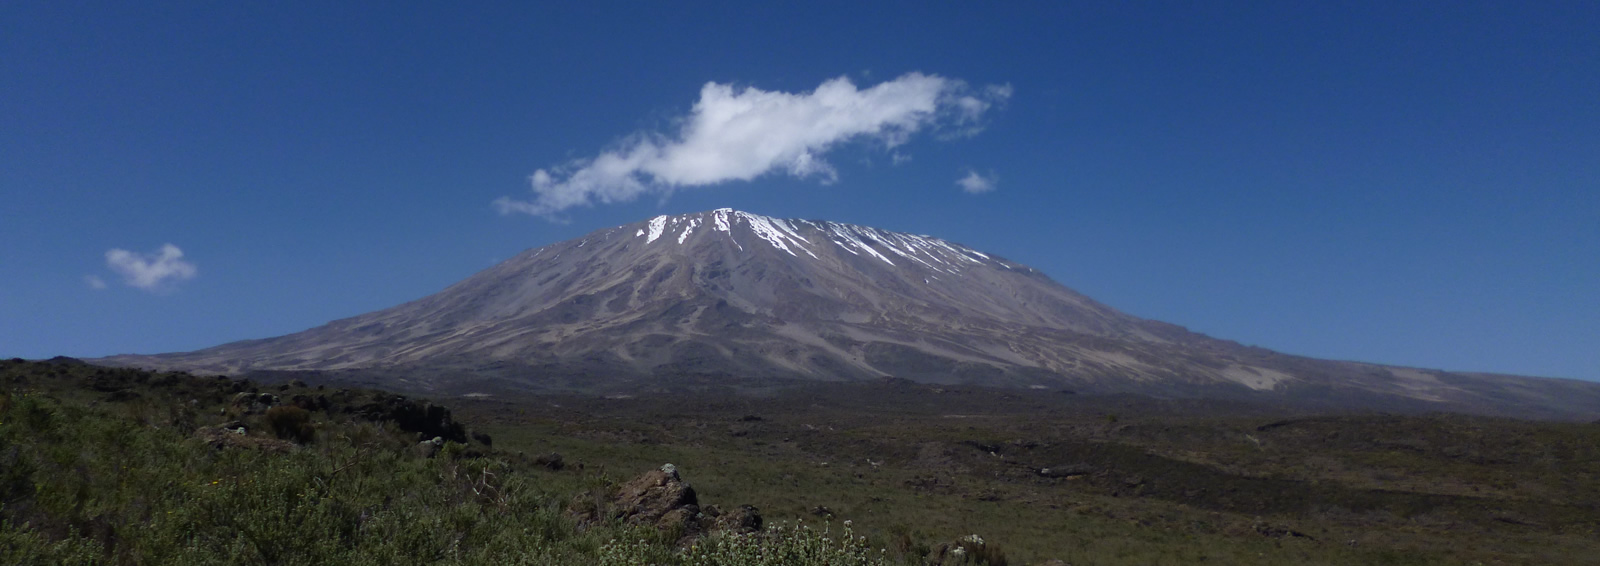 Mount Meru Kilimanjaro Climb